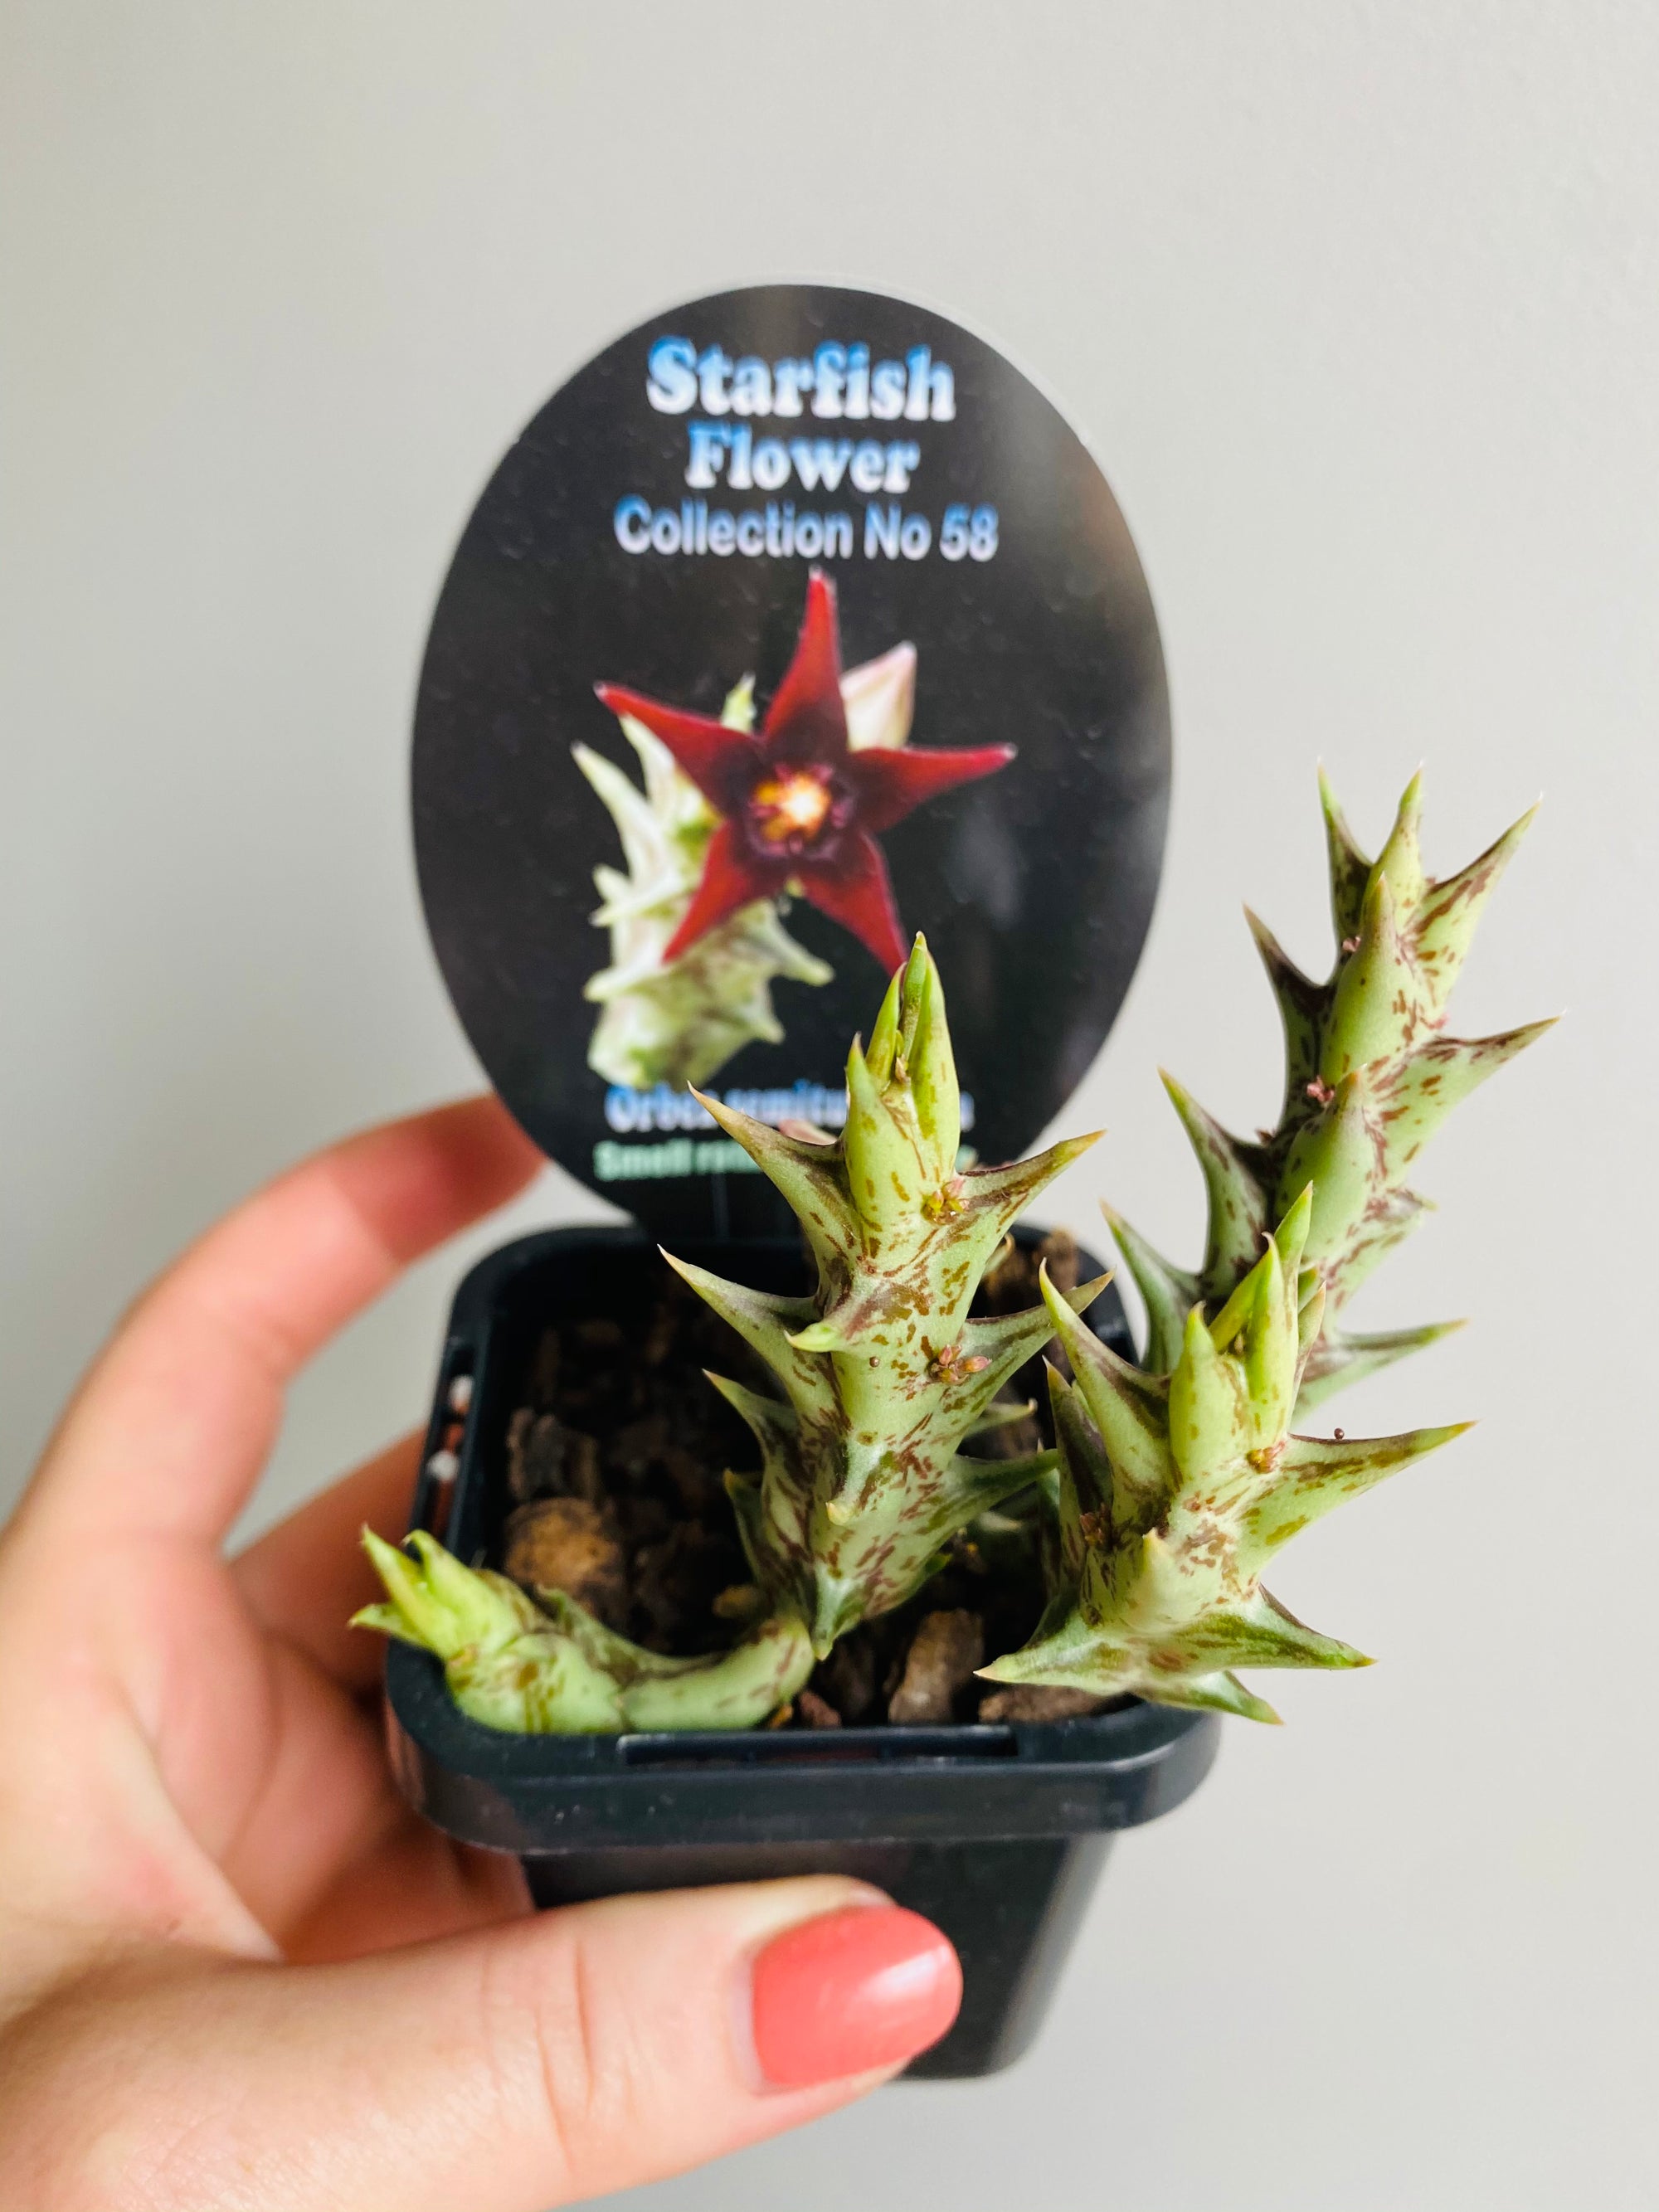 Orbea semitubiflora - Starfish Flower Collection No. 58